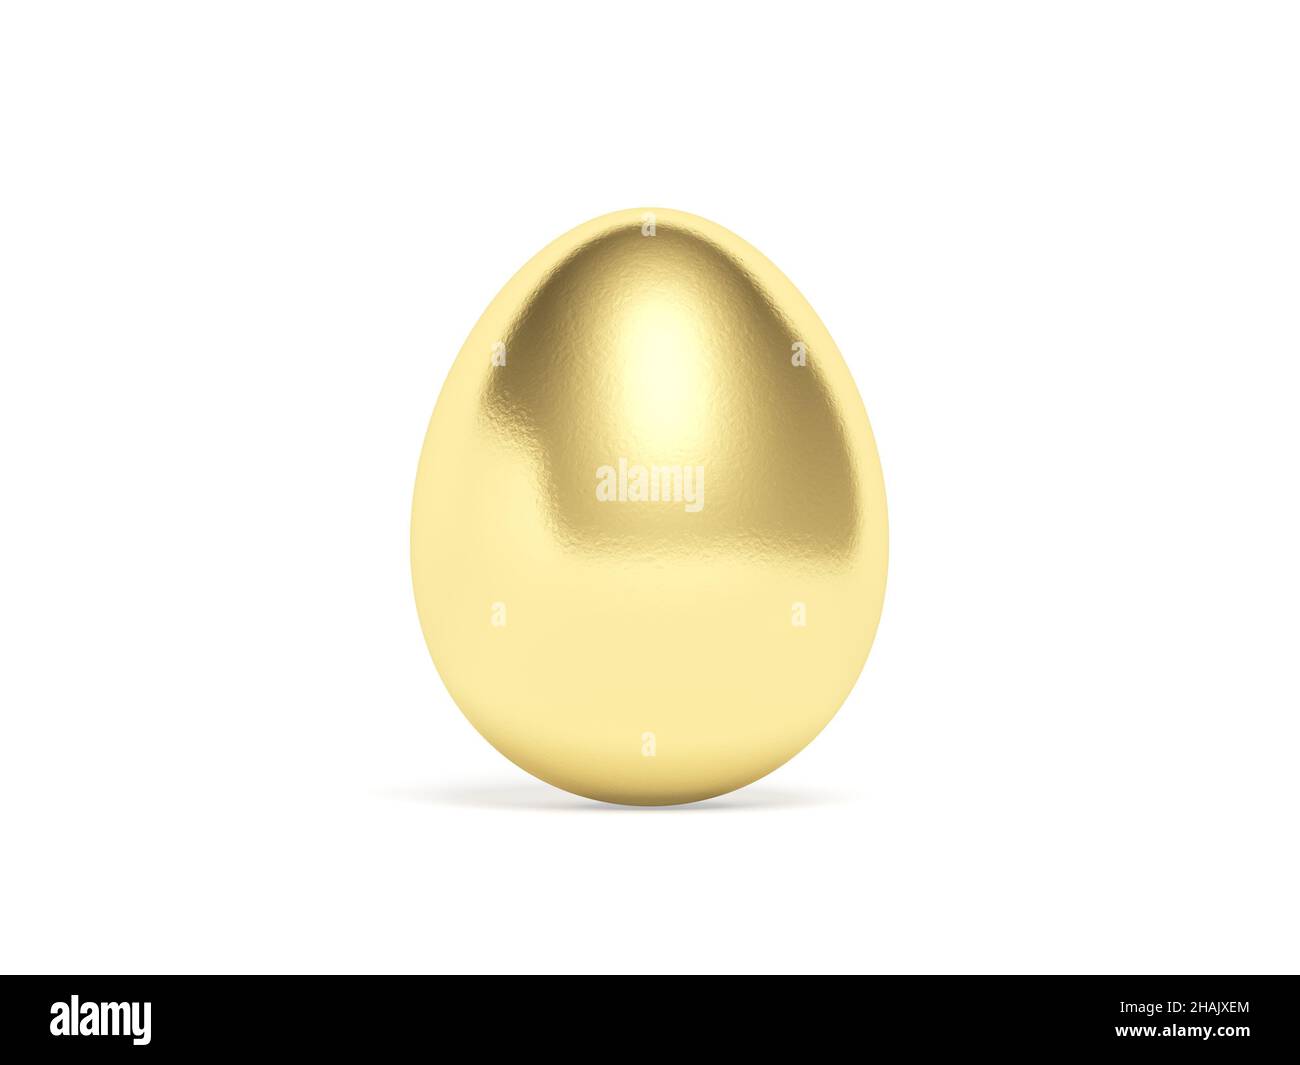 Golden egg isolated on white background. 3d illustration. Stock Photo